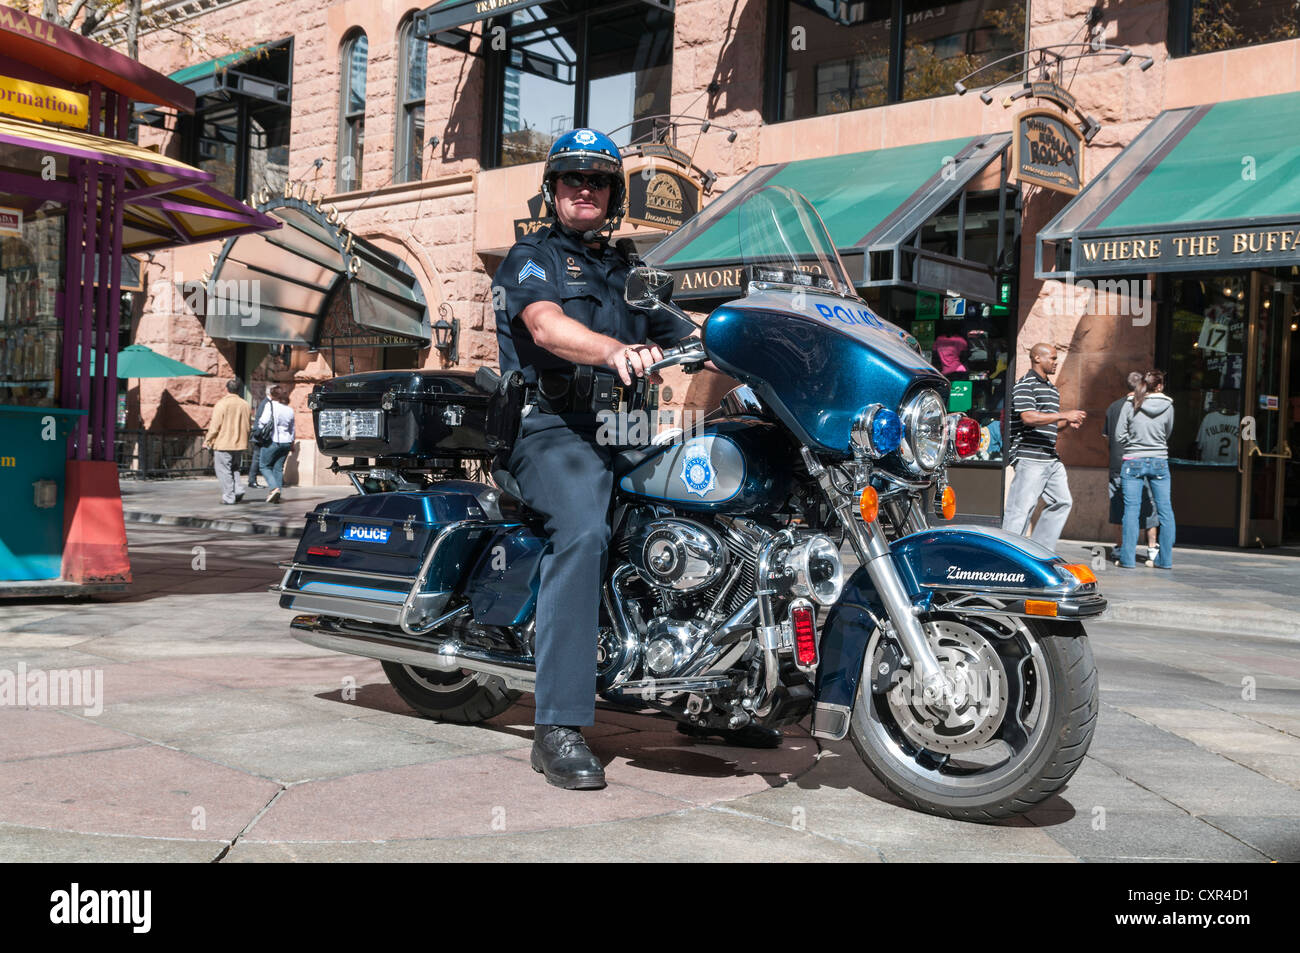 Policier sur une moto, 16th Street, Denver, Colorado, USA Photo Stock -  Alamy